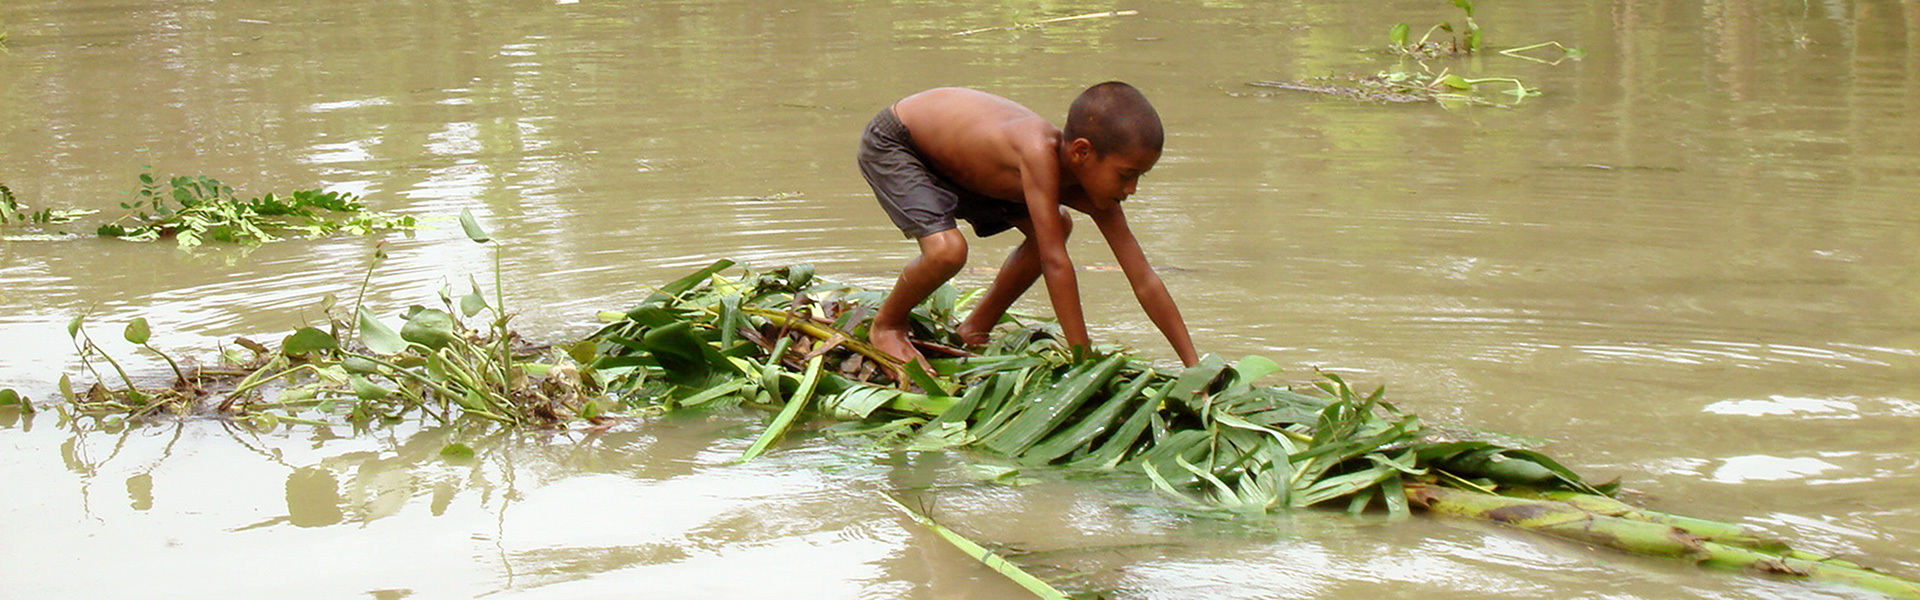 bangladesh-boy-in-water-on-float